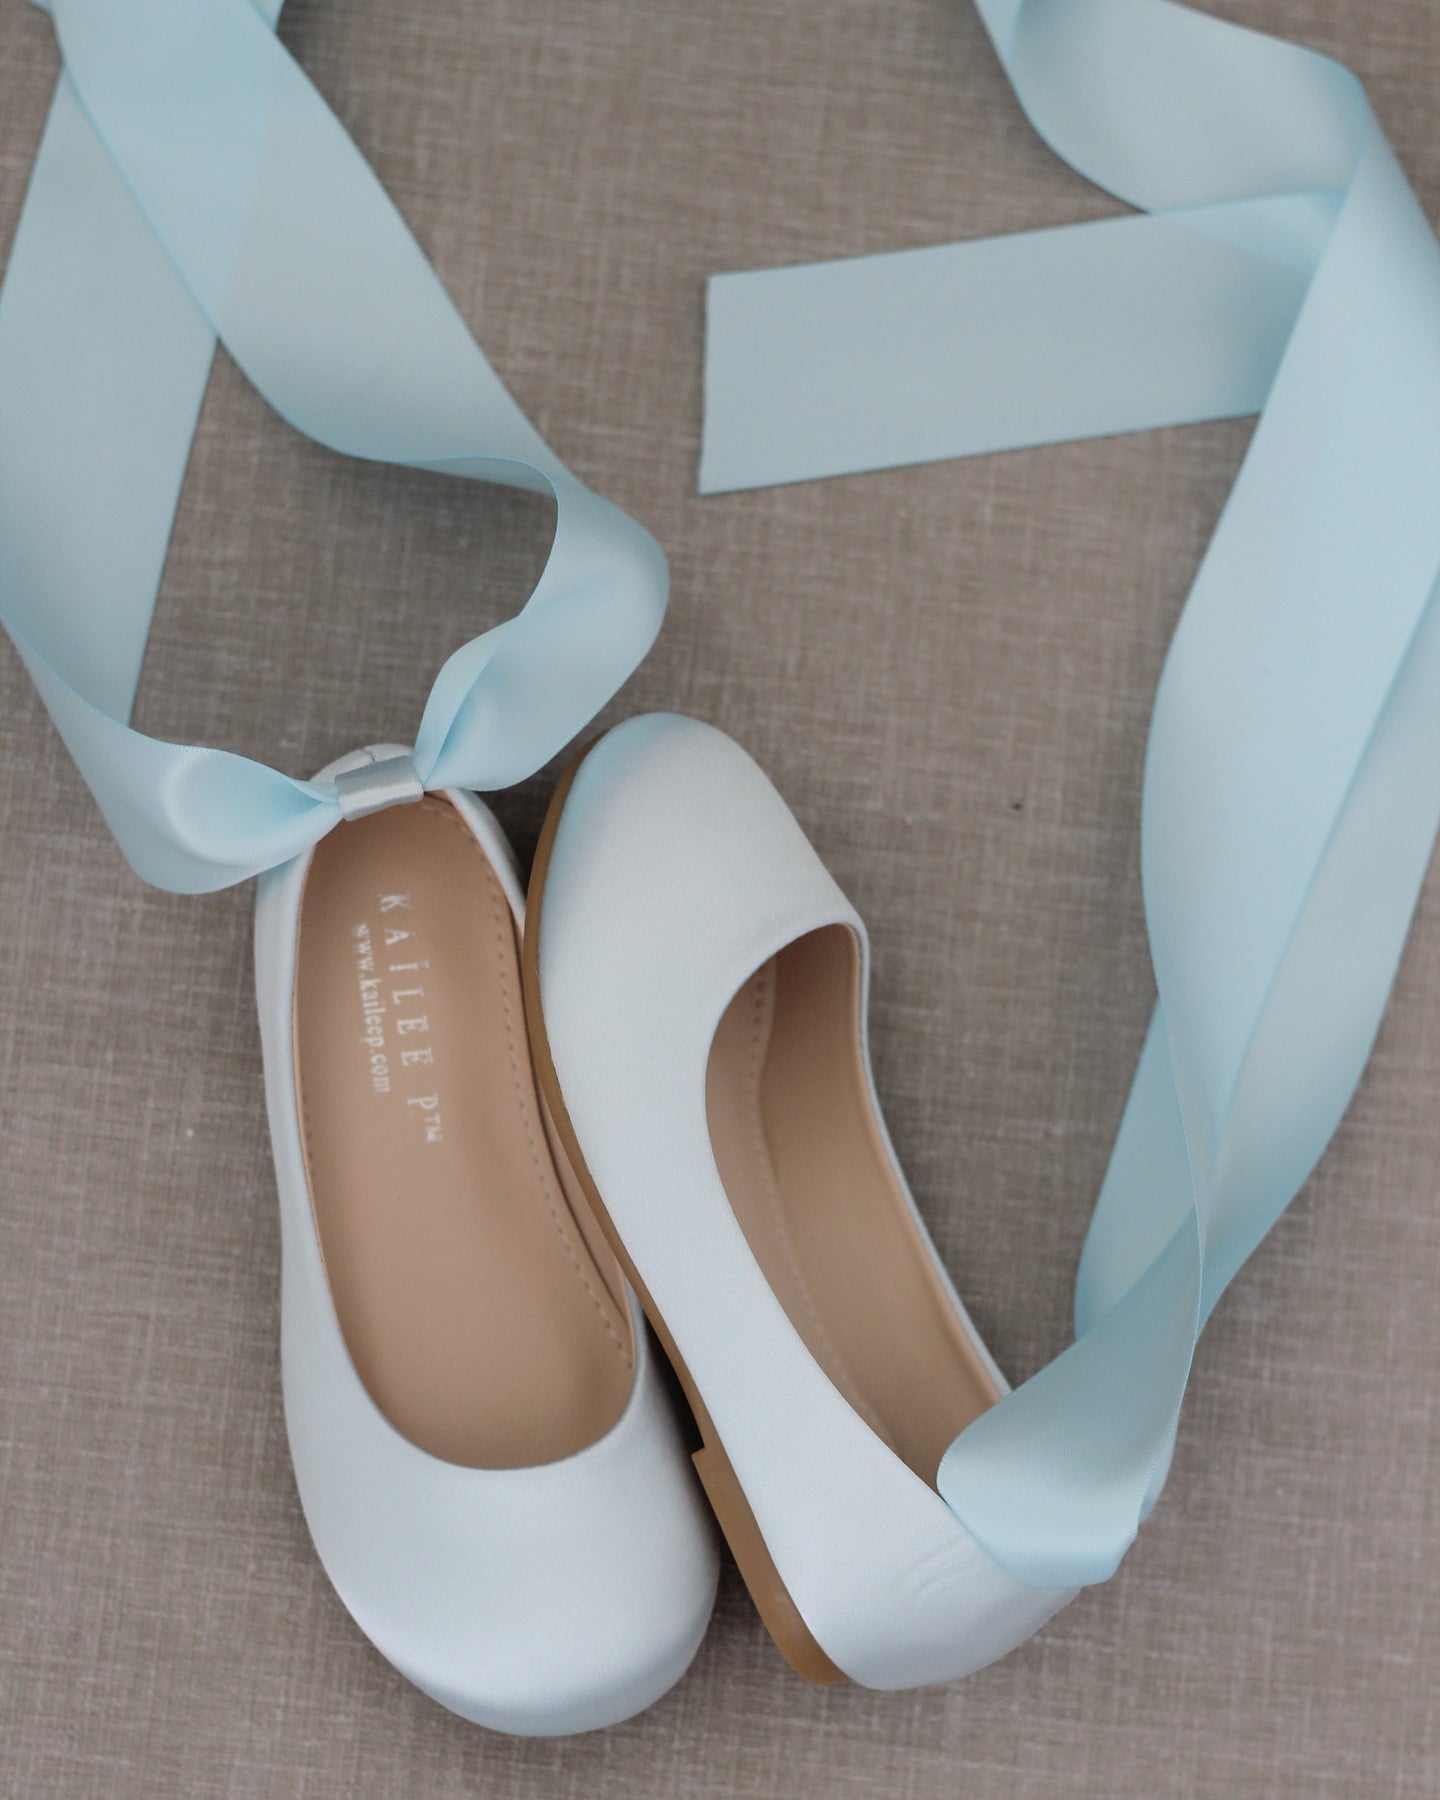 forseelser Lydighed udredning Light Blue Satin Ankle Tie or Ballerina Lace Up Flats - Flower girls shoes,  party shoes